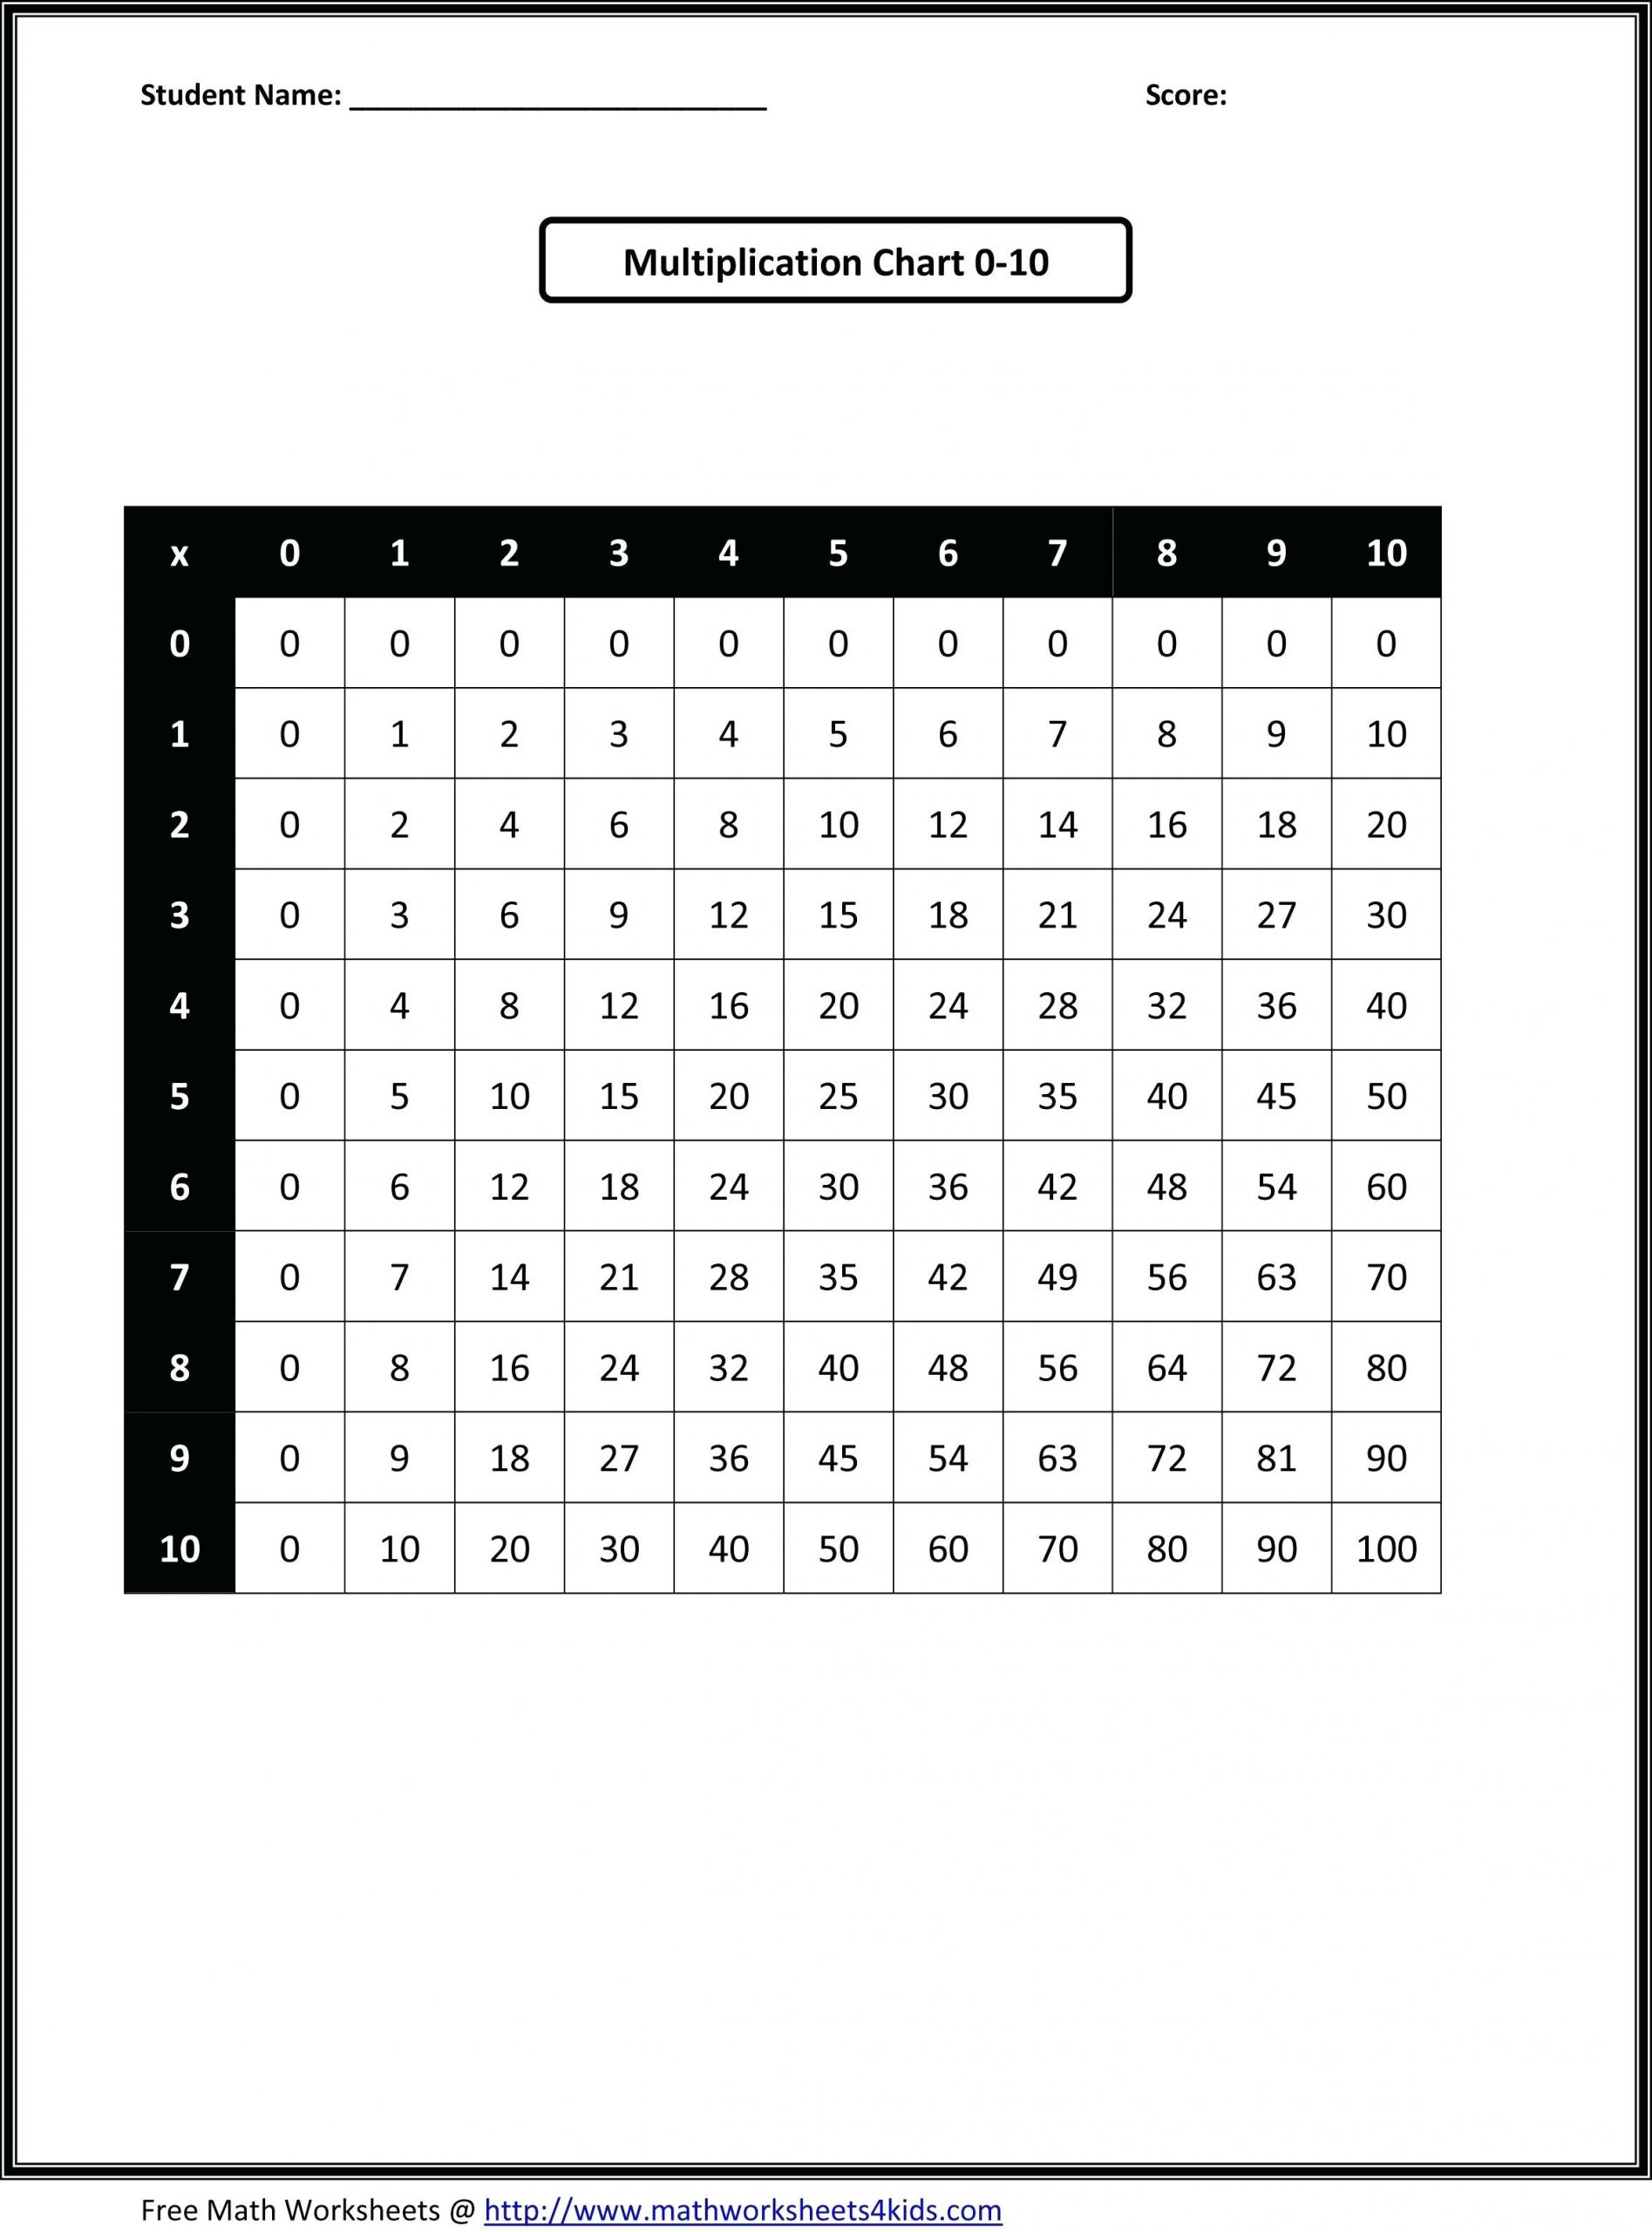 Free Math Worksheets Third Grade 3 Division Division Facts 1 to 10